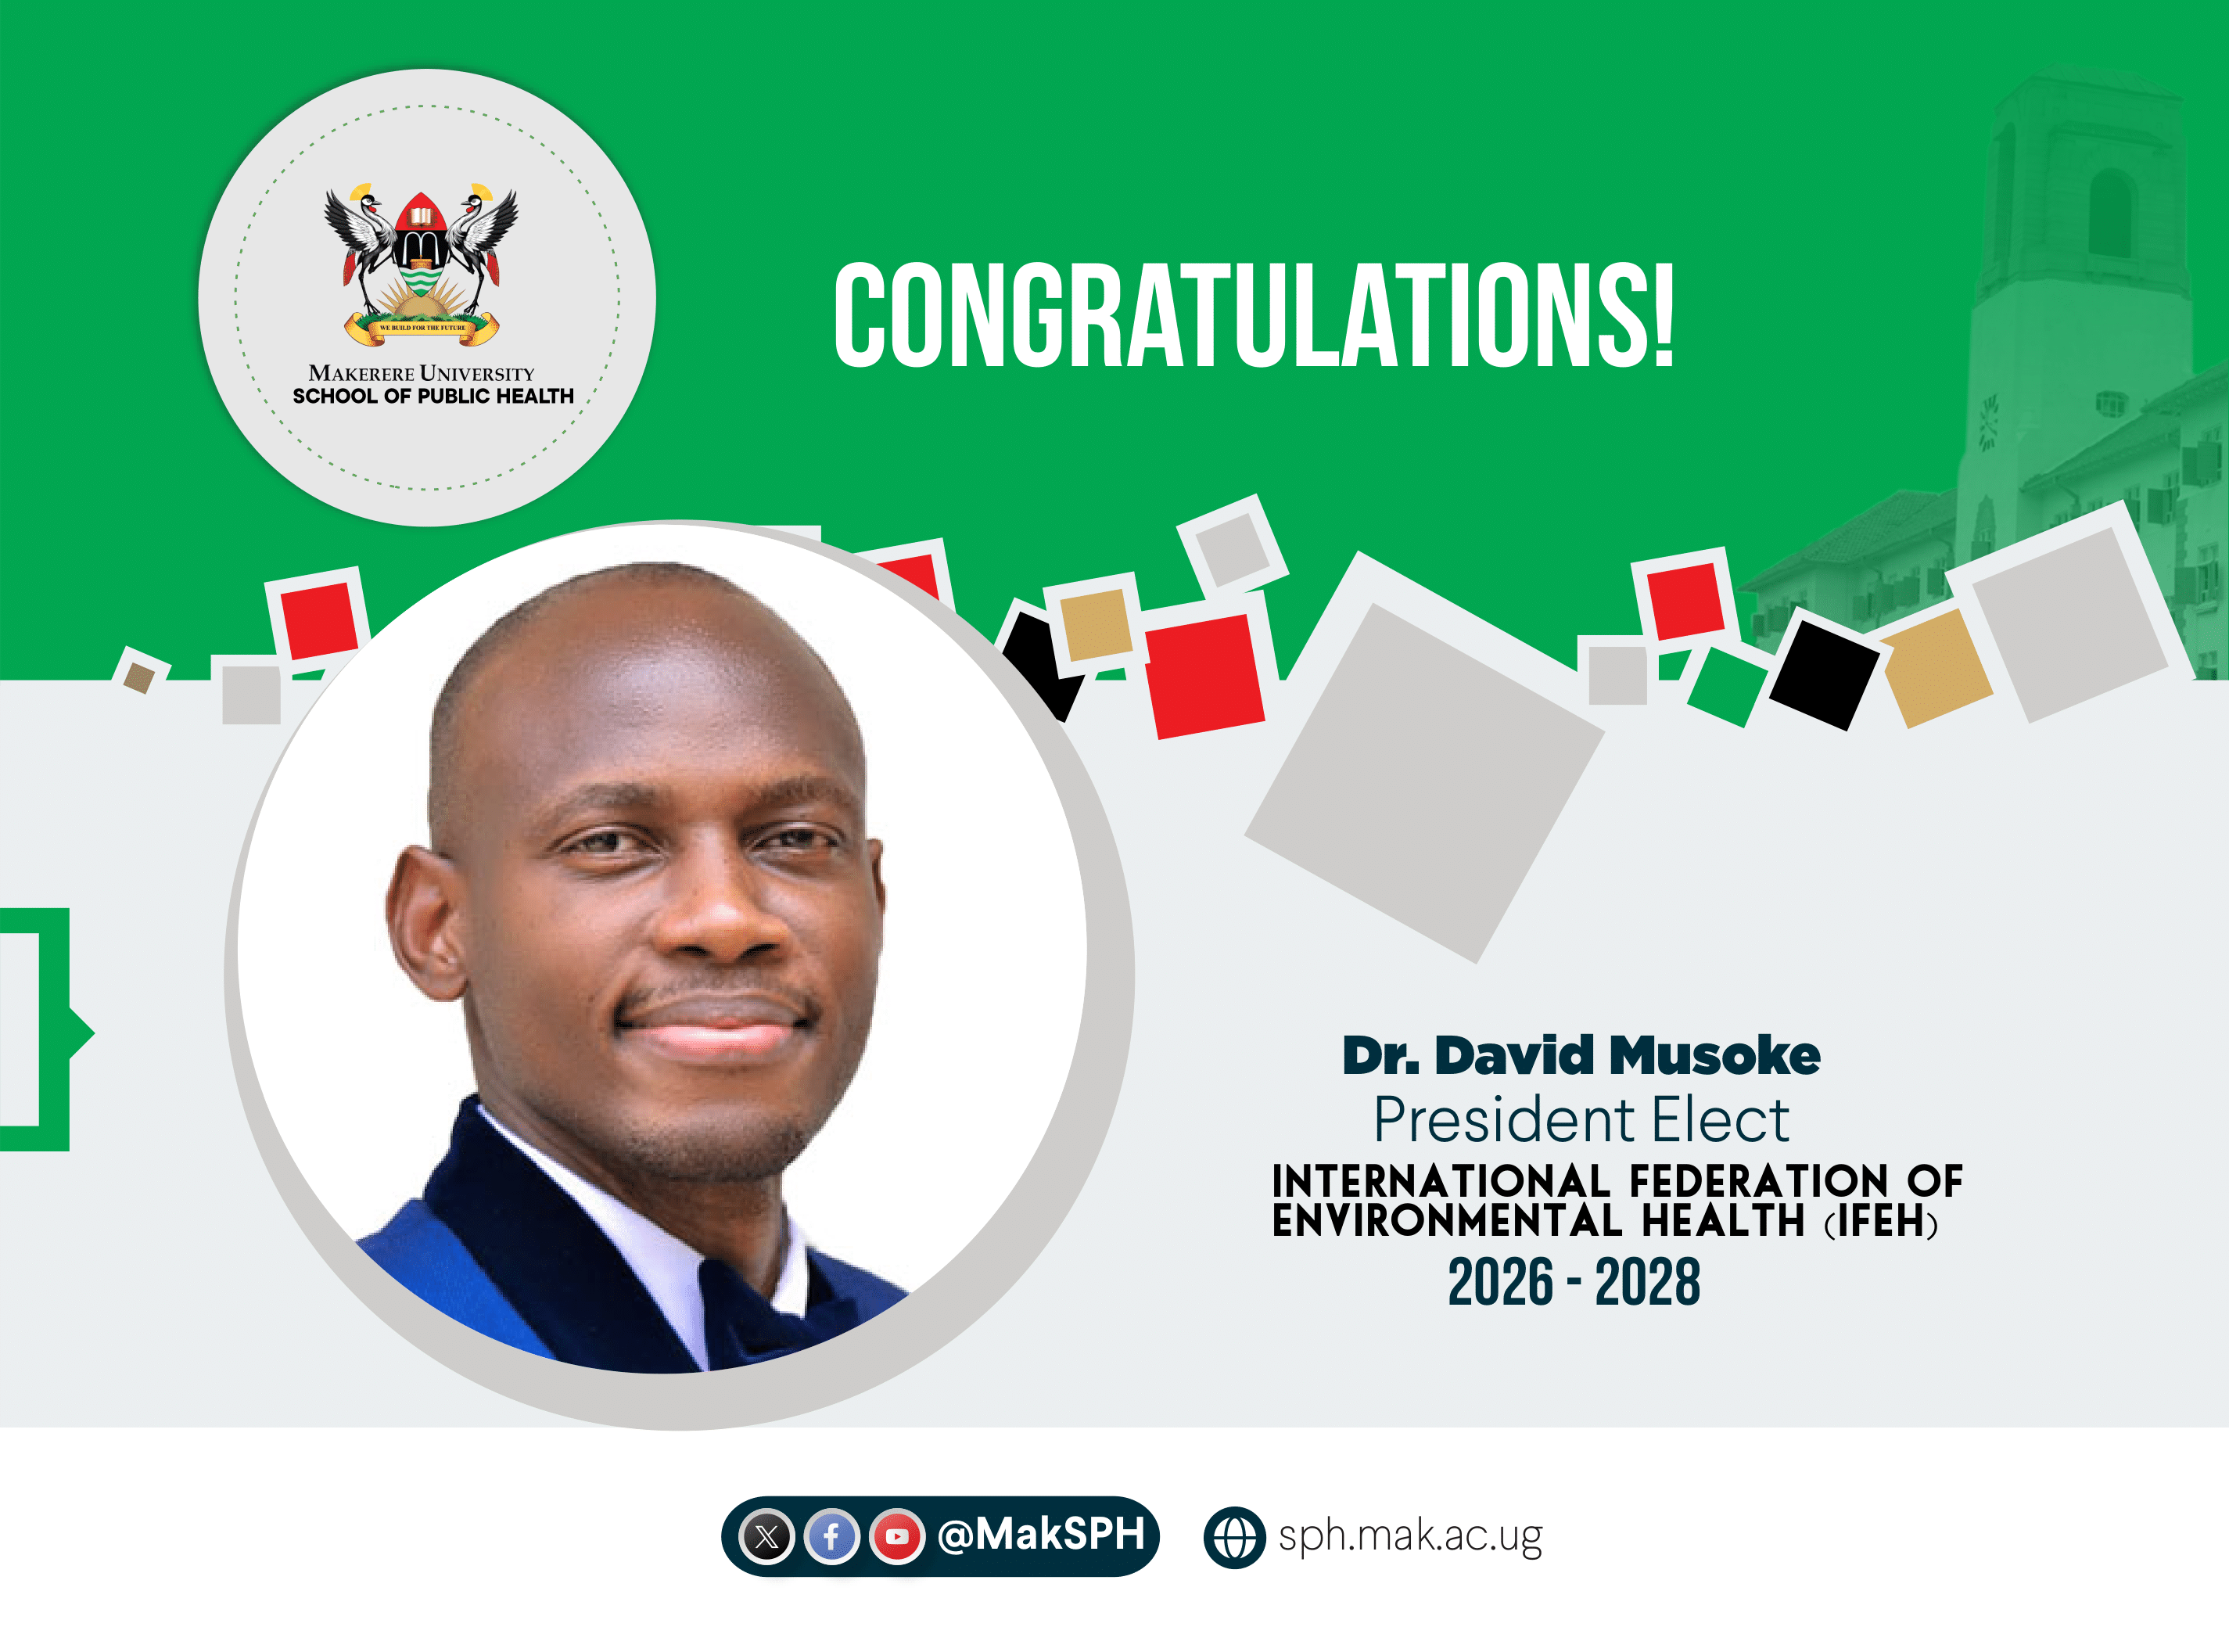 Dr. David Musoke Elected President of International Federation of Environmental Health